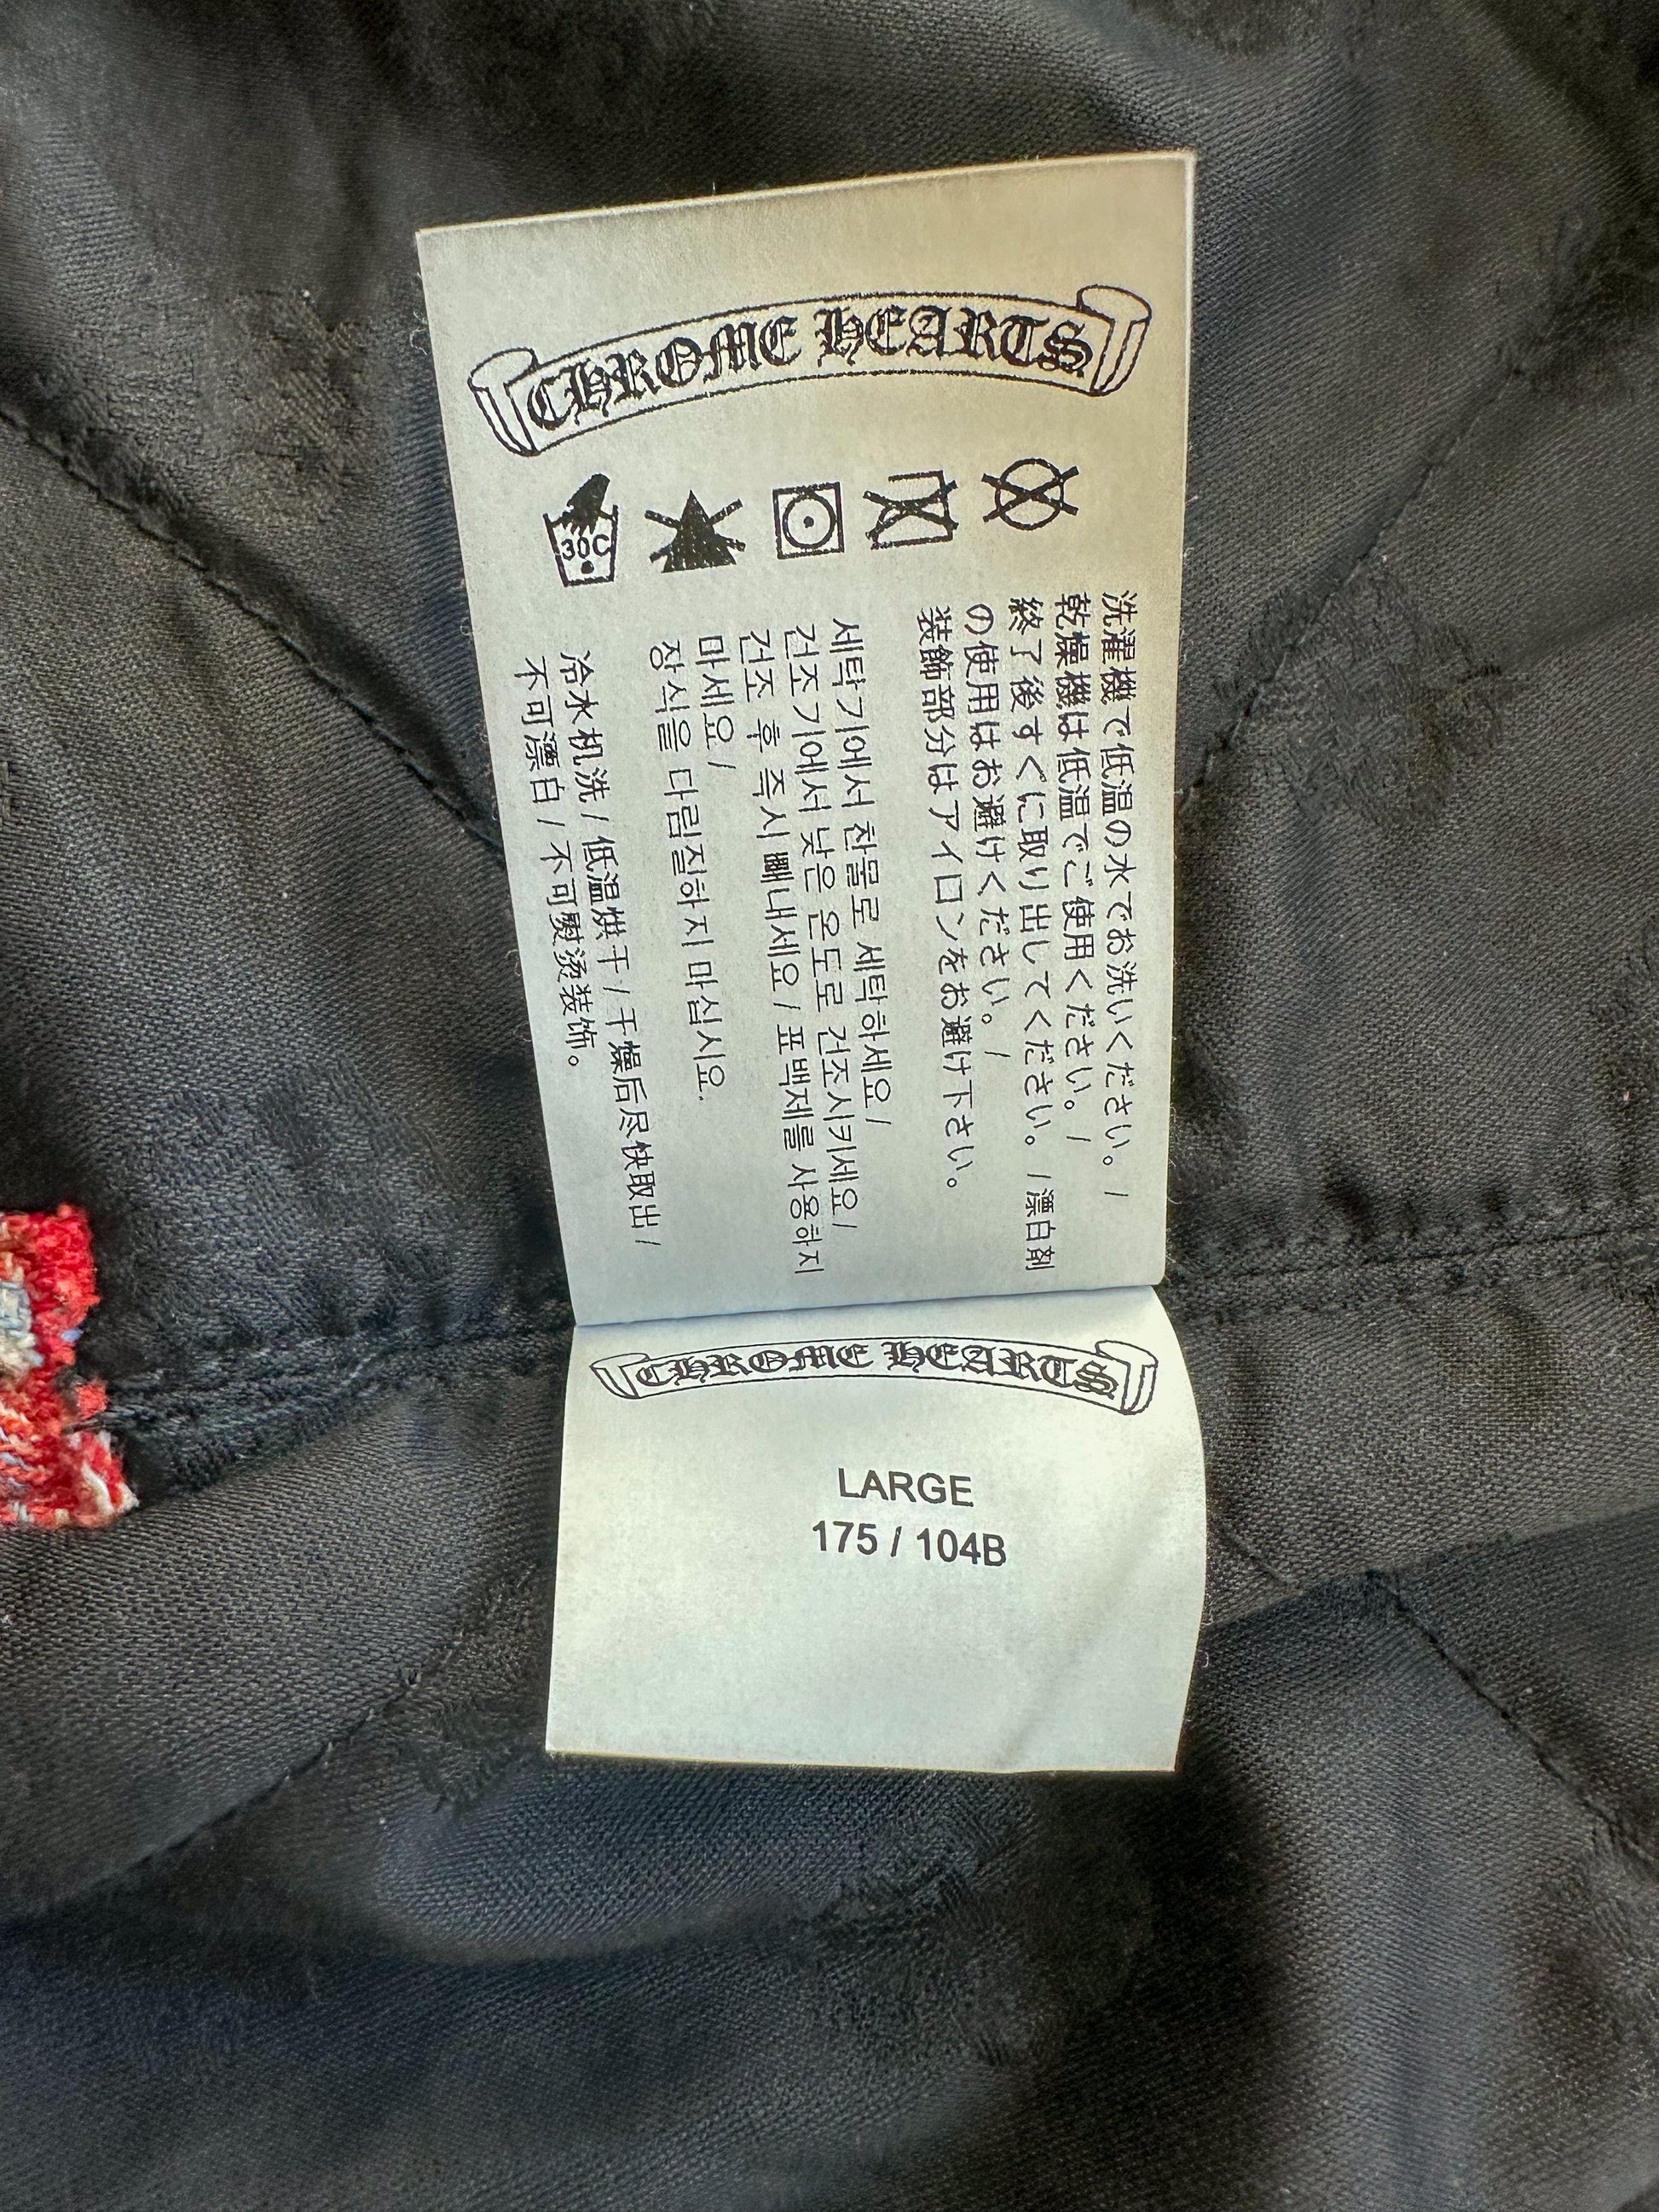 Jacket Makers Chrome Hearts Jeans Jacket